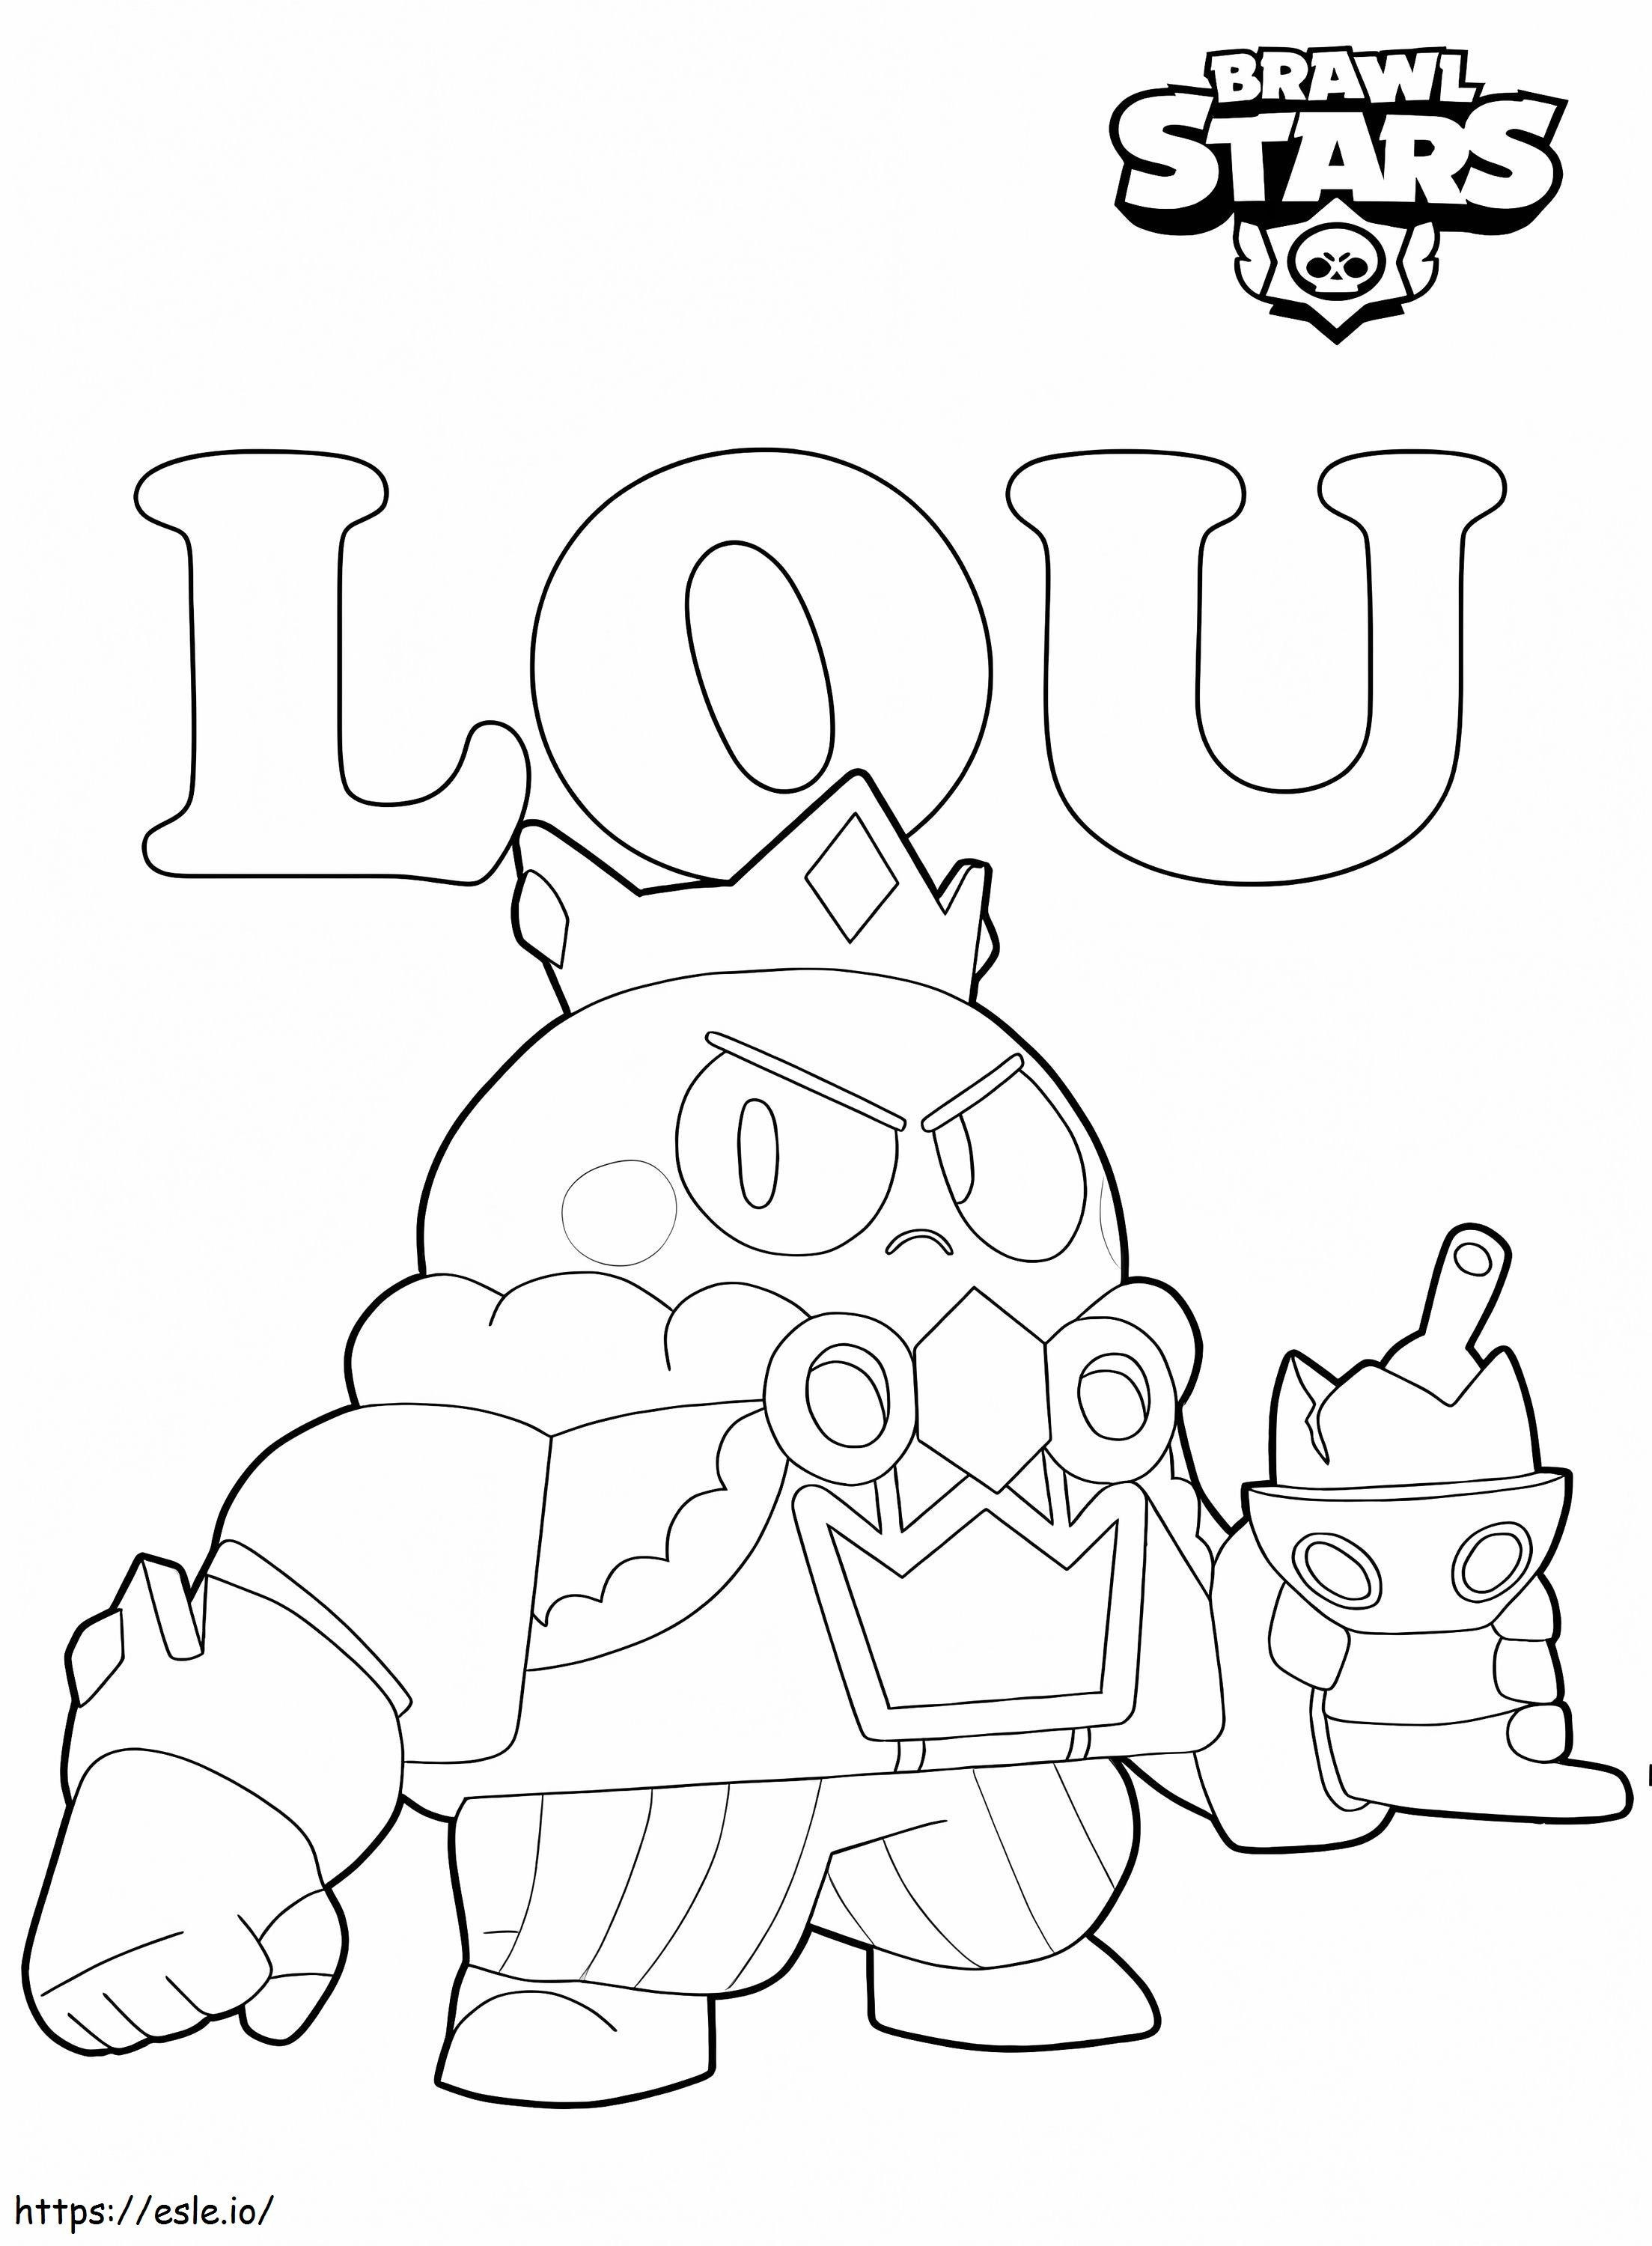 King Lou Brawl Stars coloring page